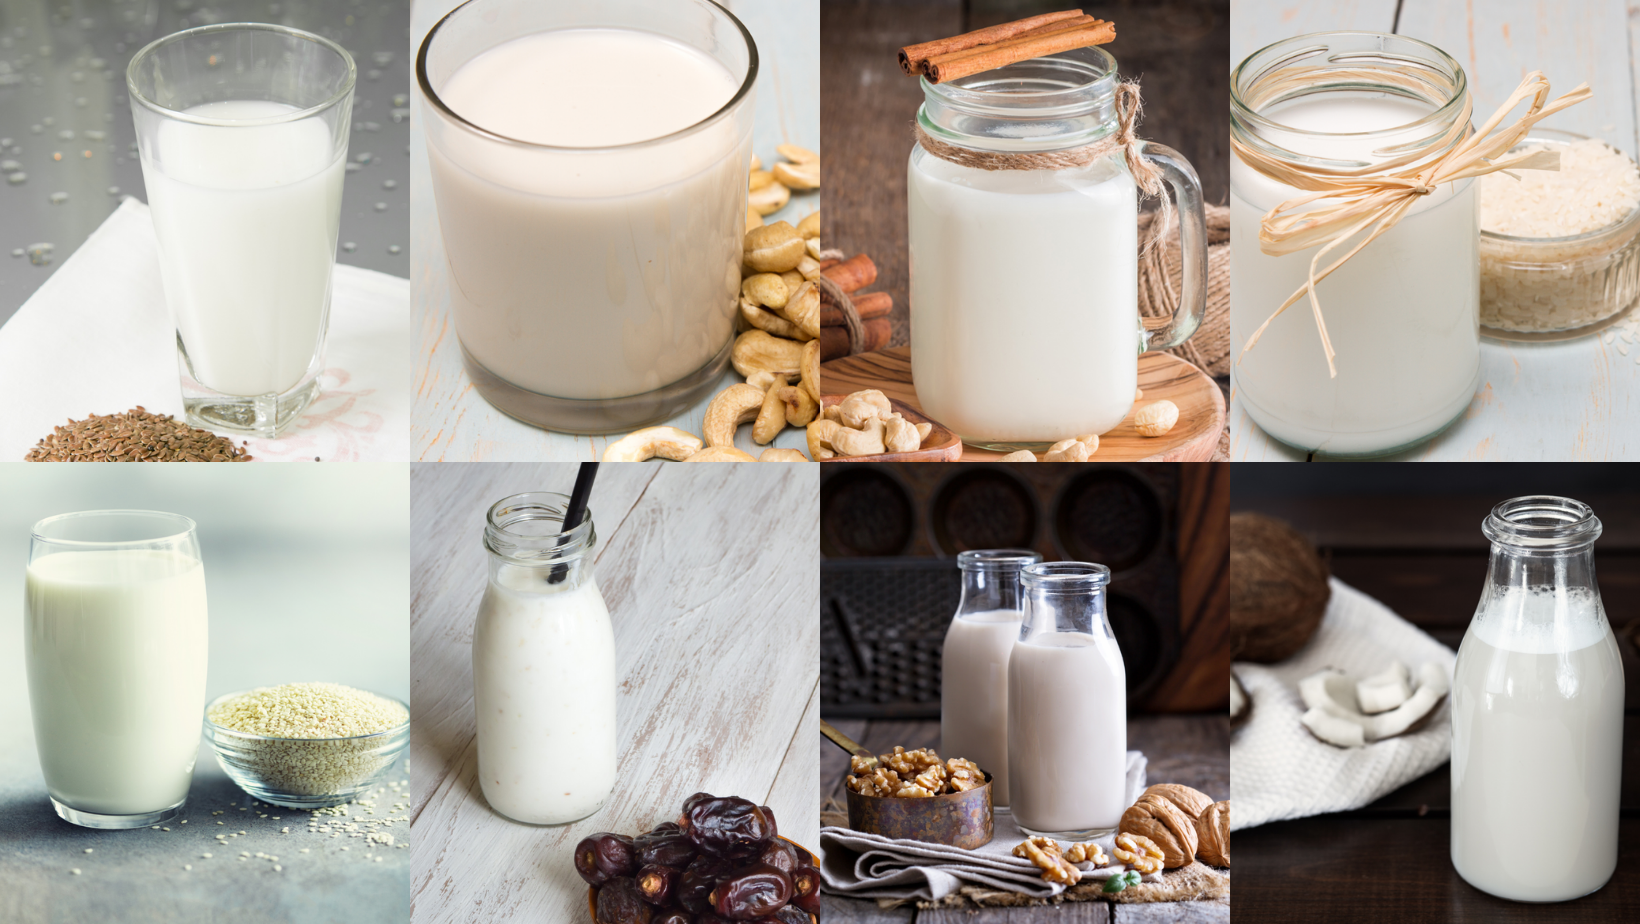 8 Best Vegan Milk Recipes For Your Kids